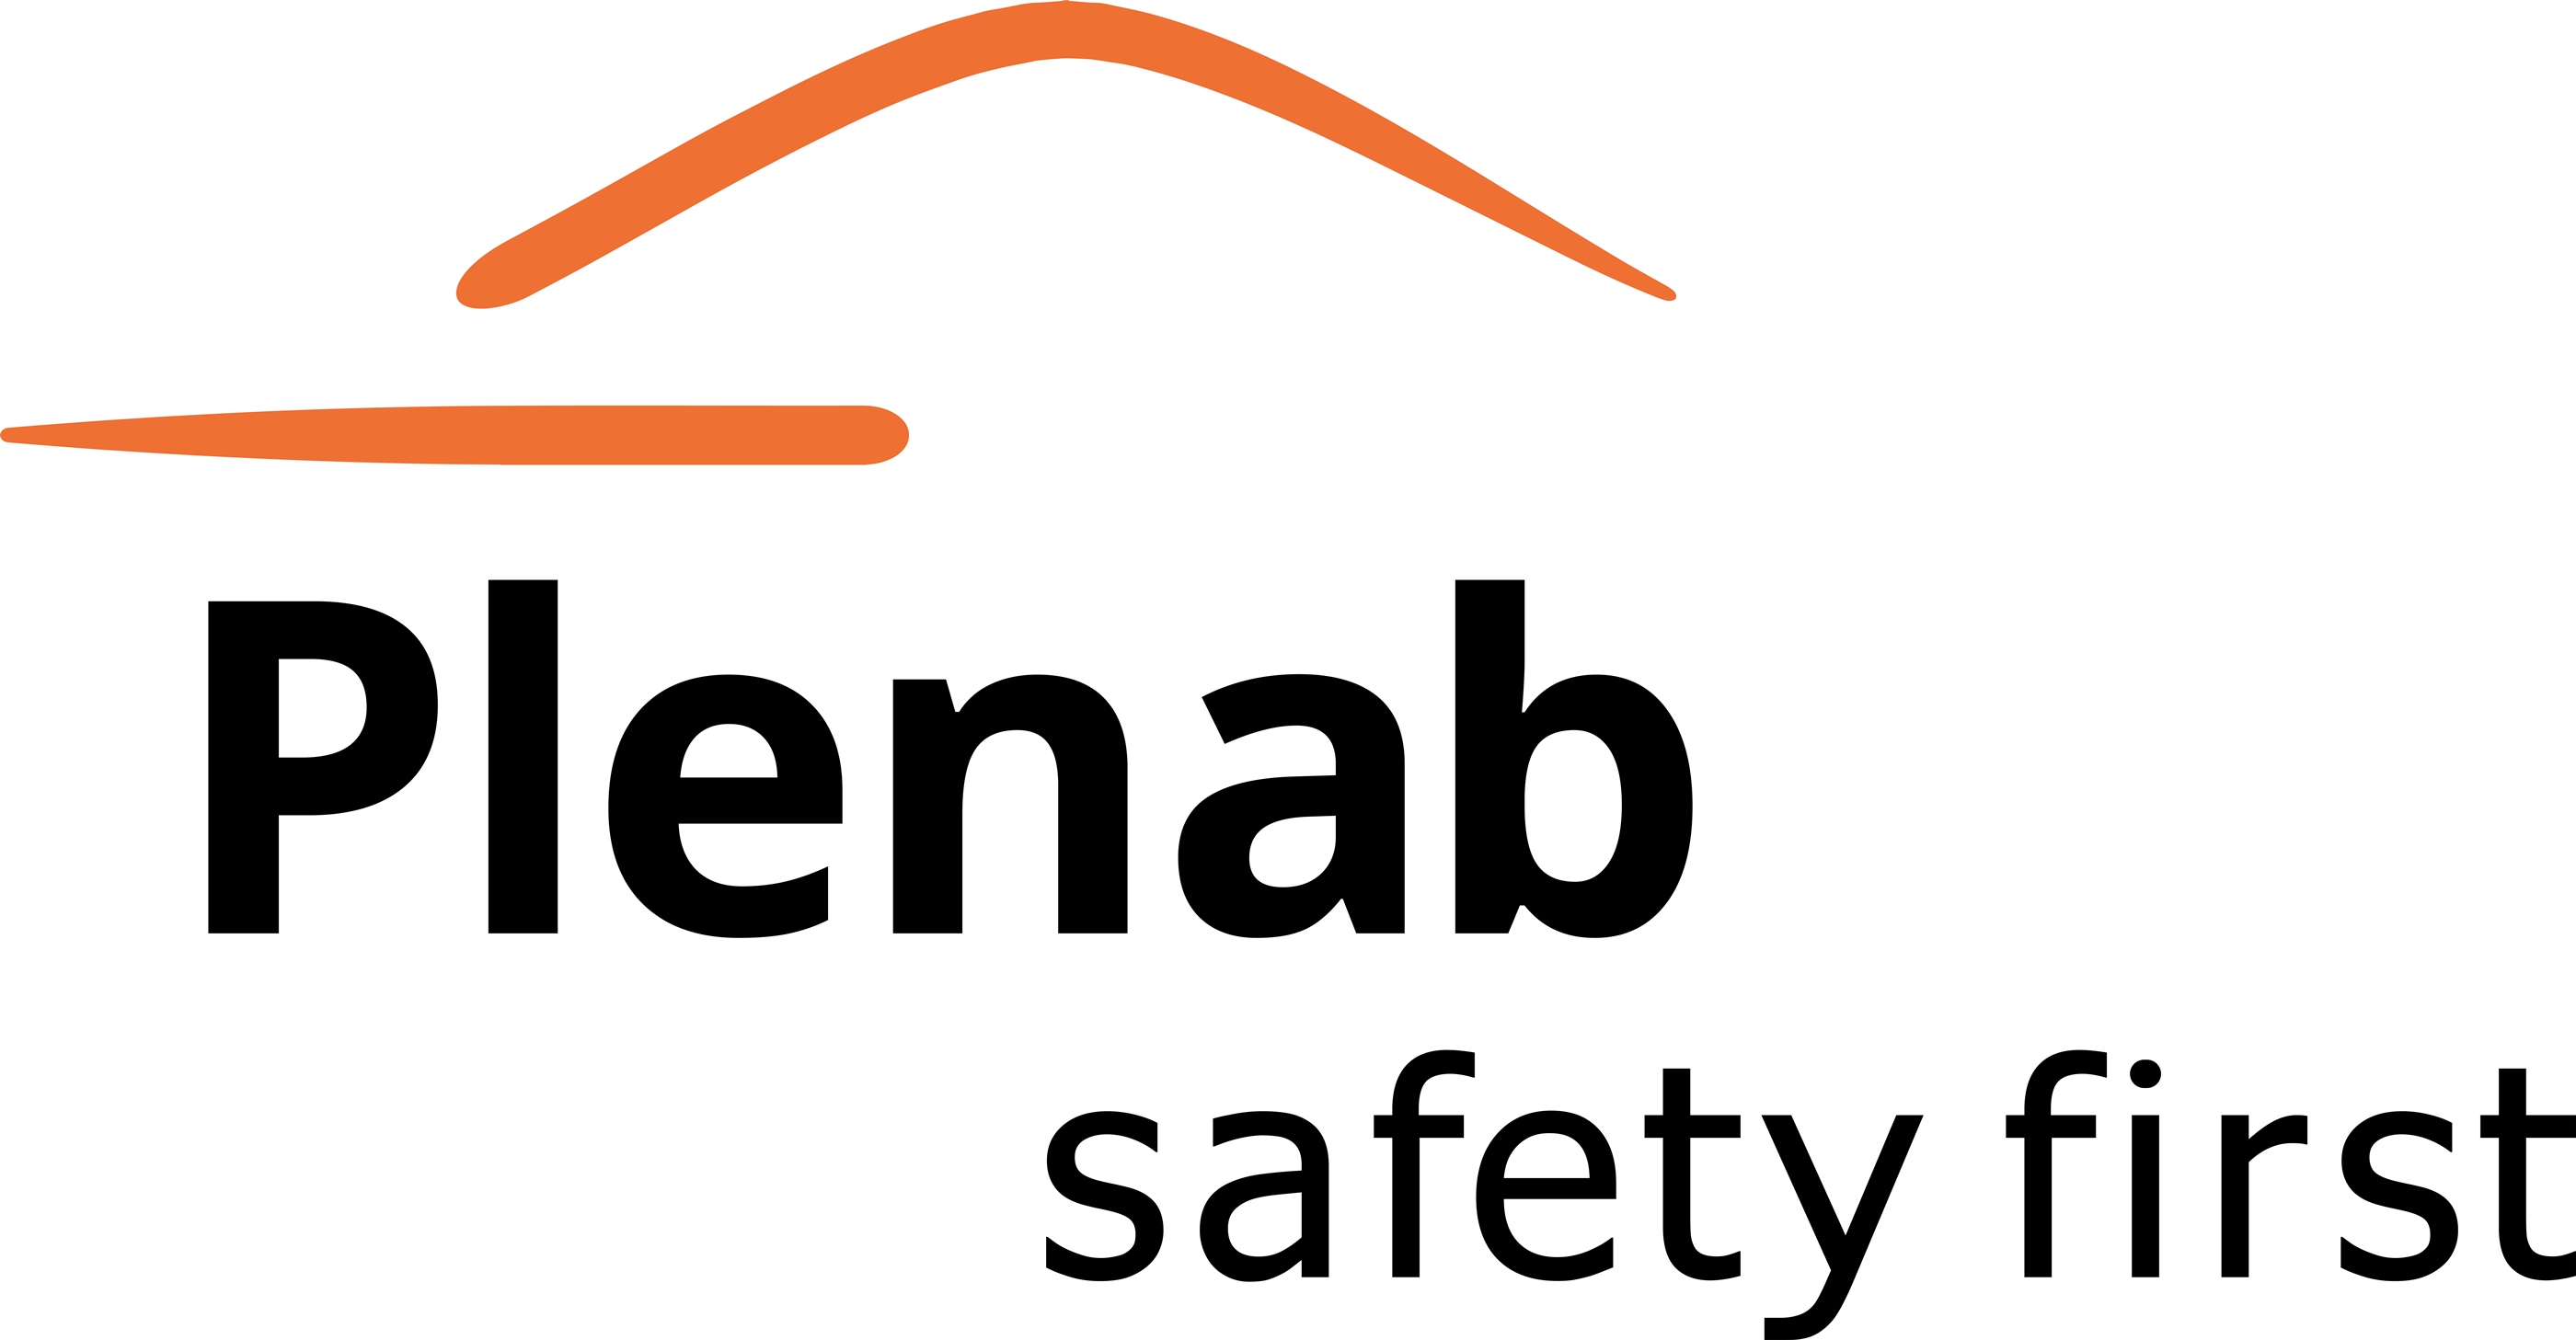 Plenab safety first